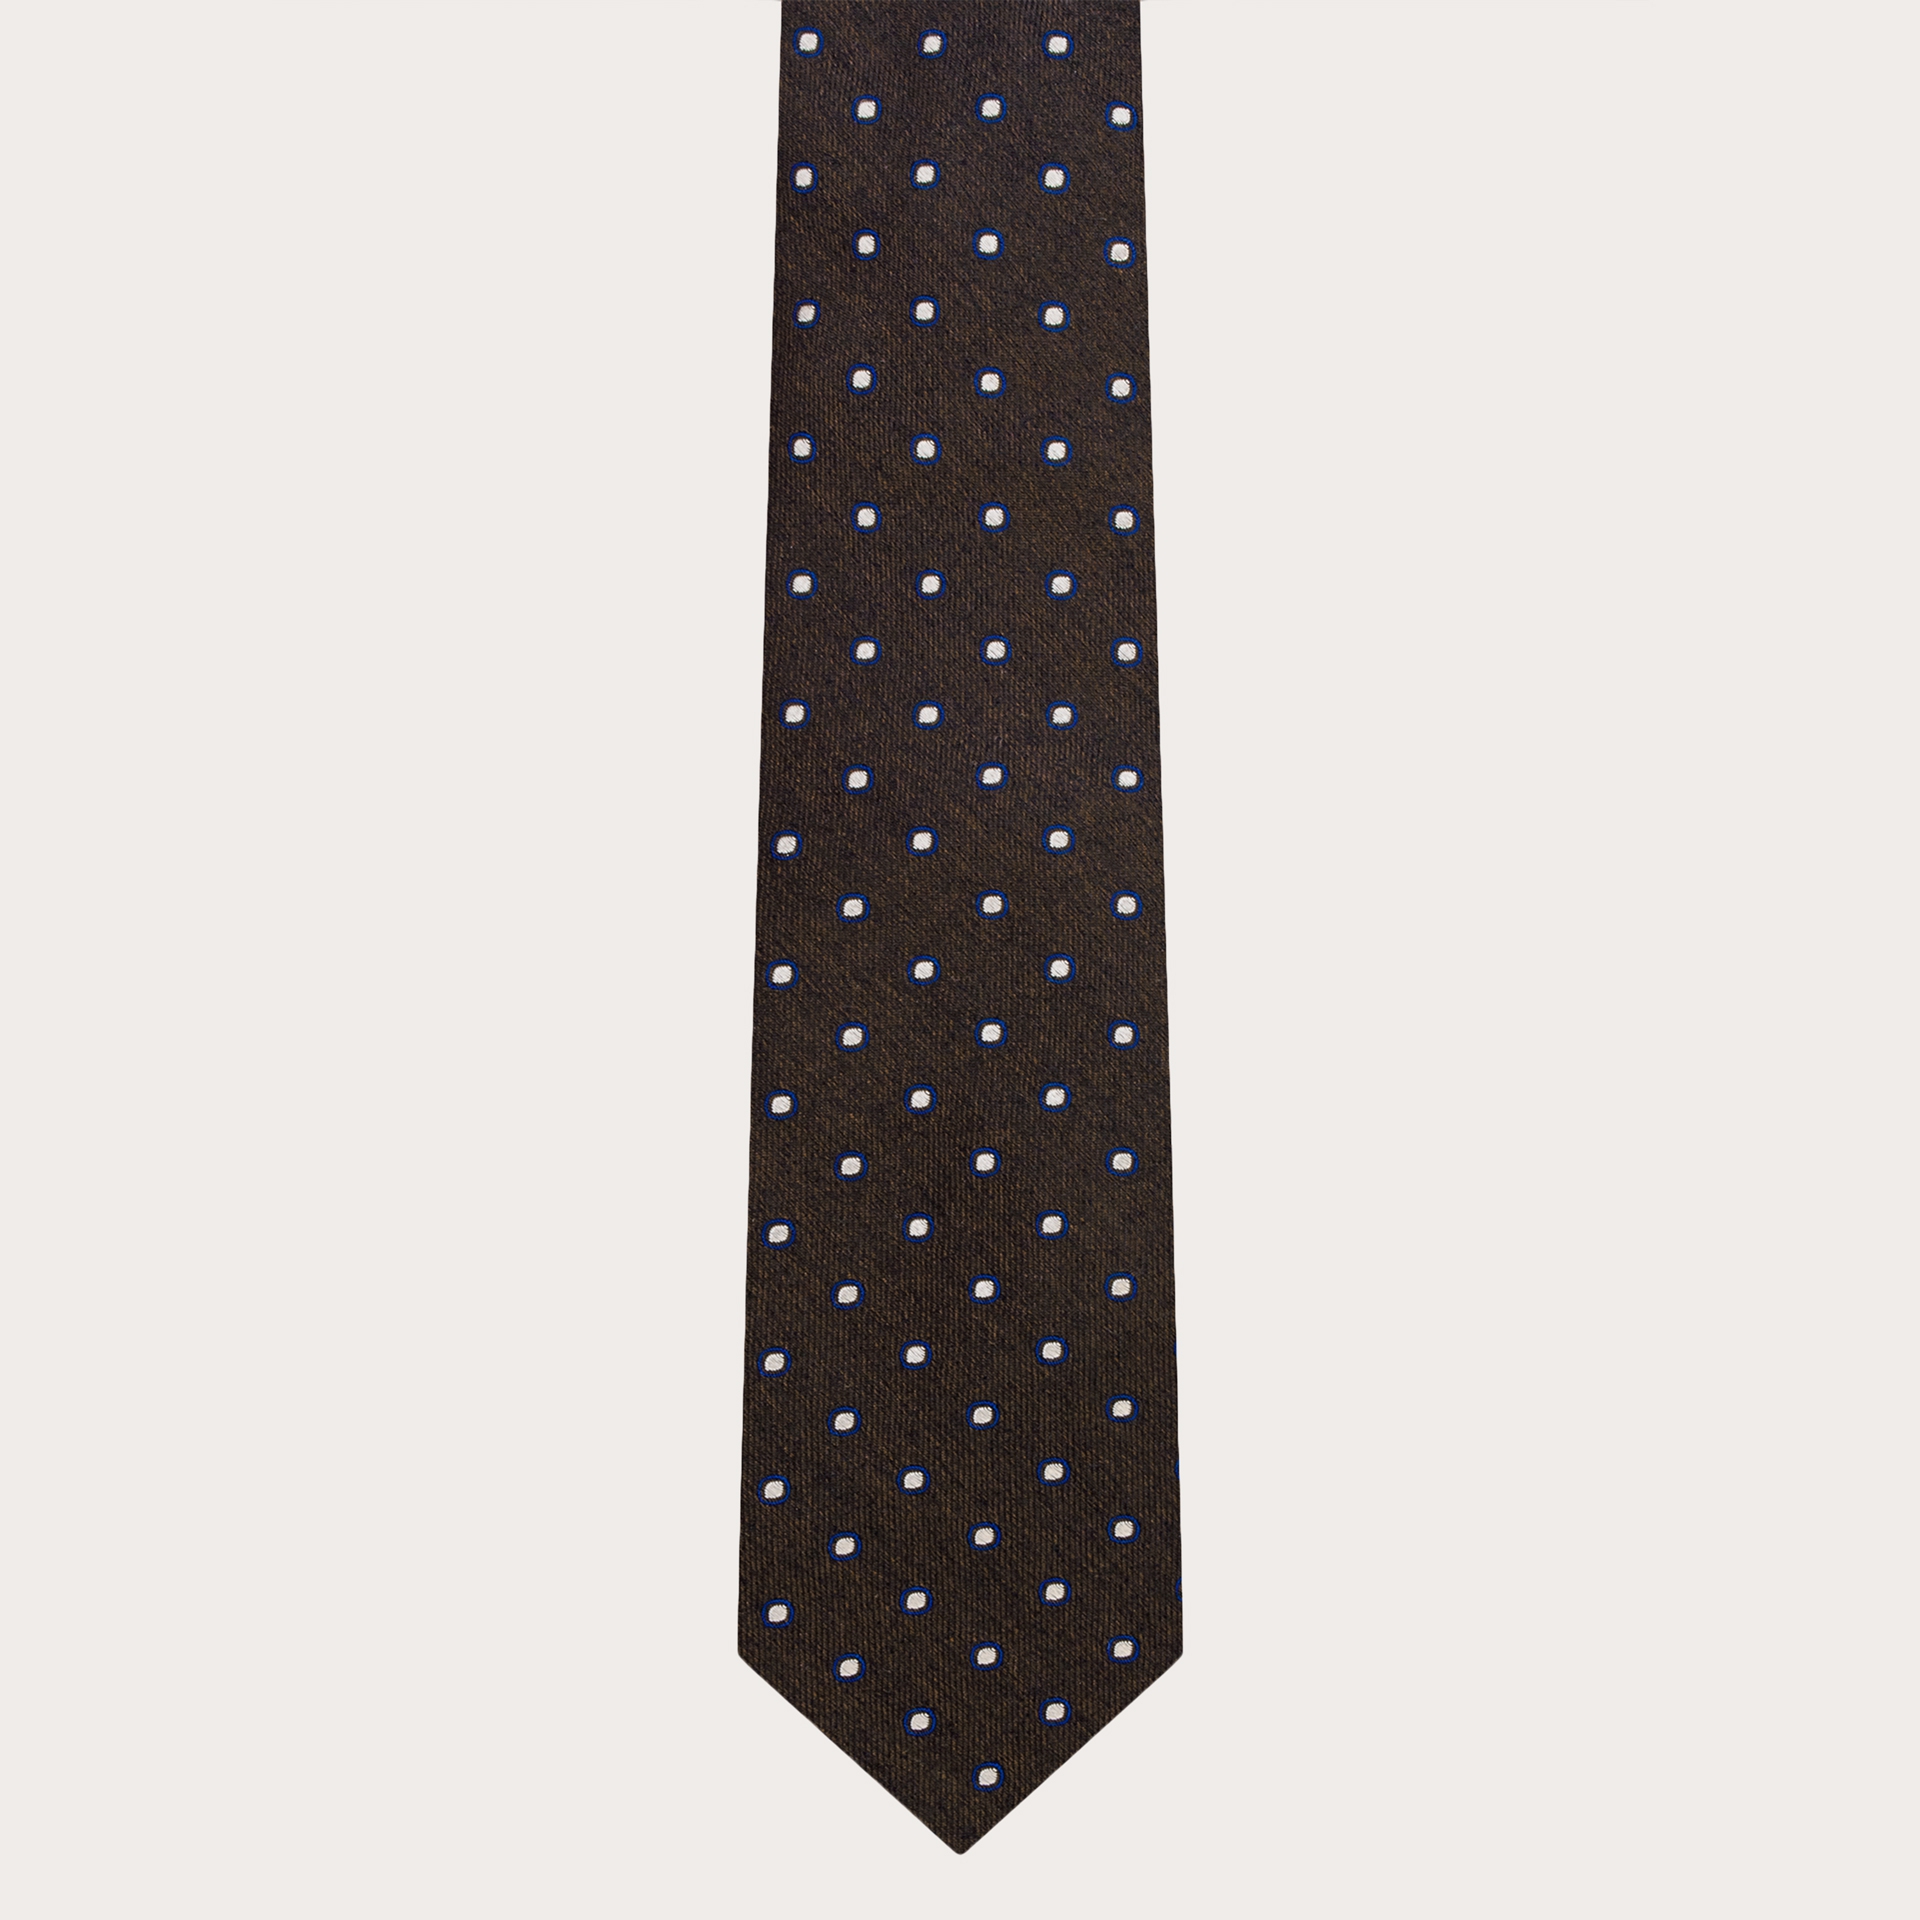 Krawatte aus Jacquard-Seide, braun mit Tupfen